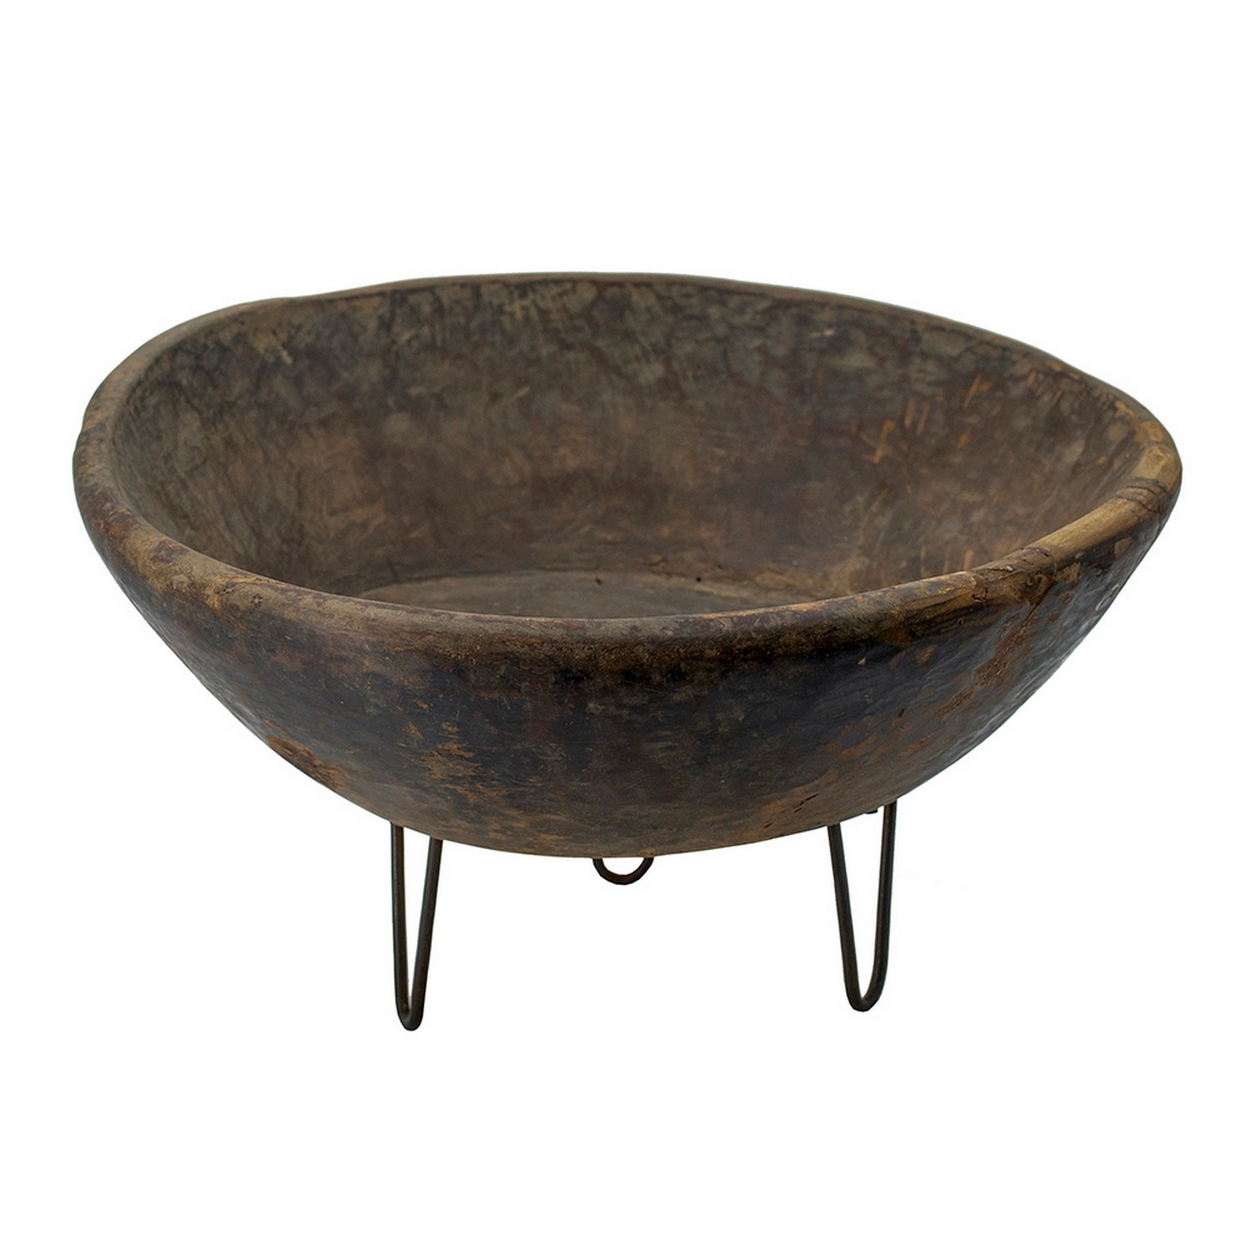 20 Inch Round Parat Bowl, Handcarved Wood Design, Rustic Brown Texturing- Saltoro Sherpi